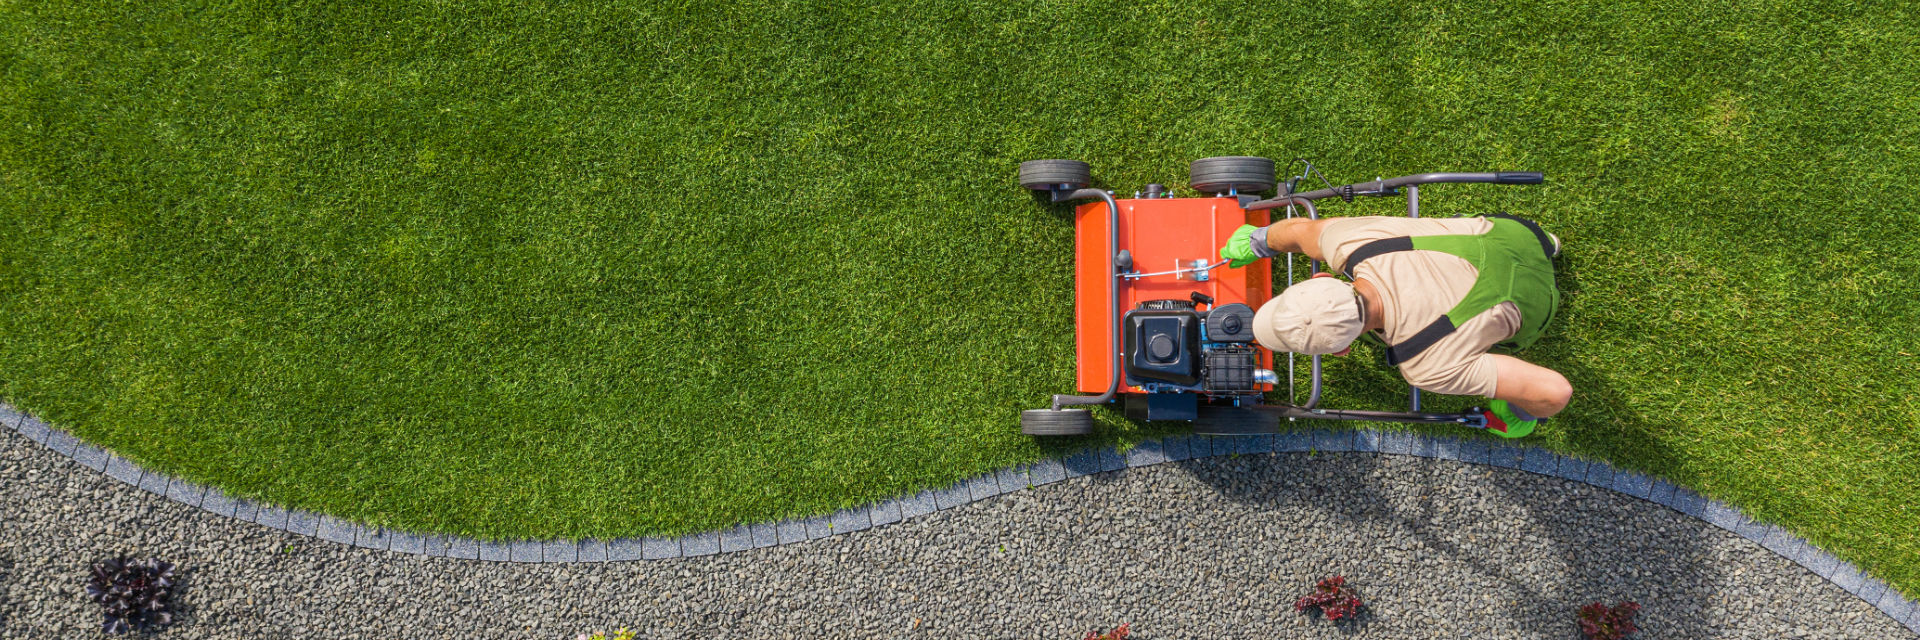 A professional landscaper mowing a lawn.